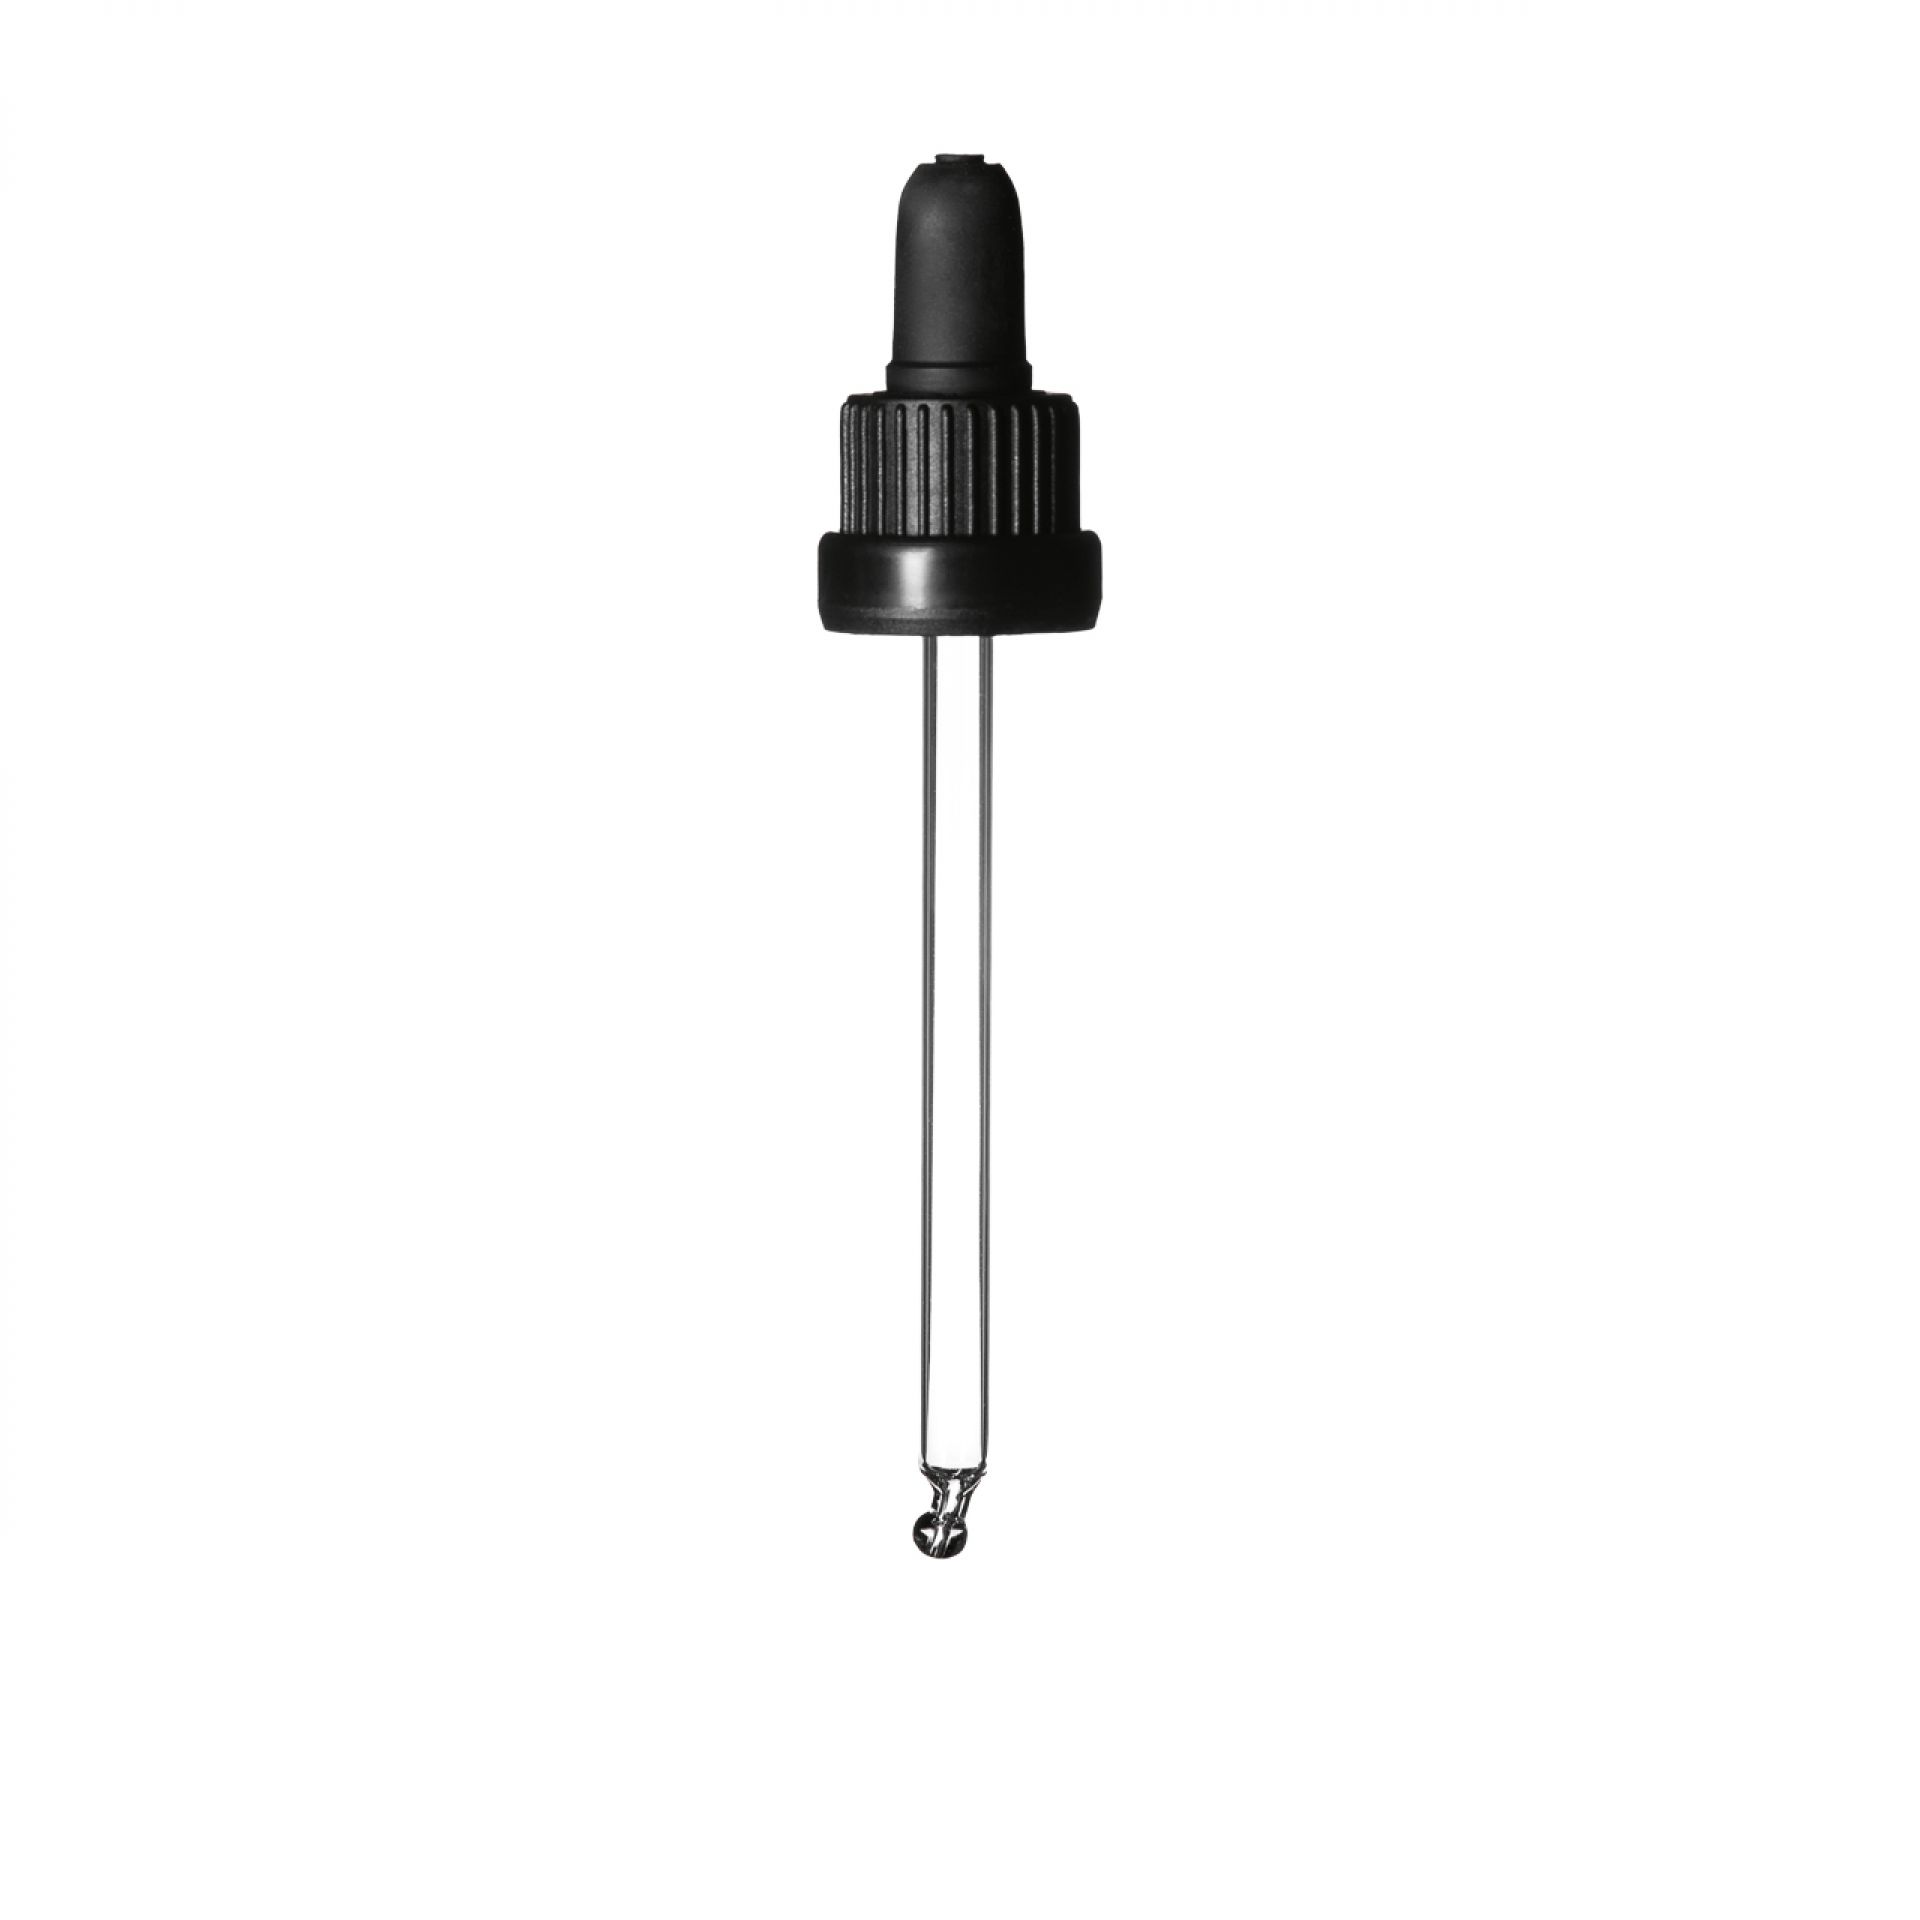 Pipette tamper evident DIN18, III, black, ribbed, bulb TPE, dose 0.7ml, bent ball tip (Orion 50)